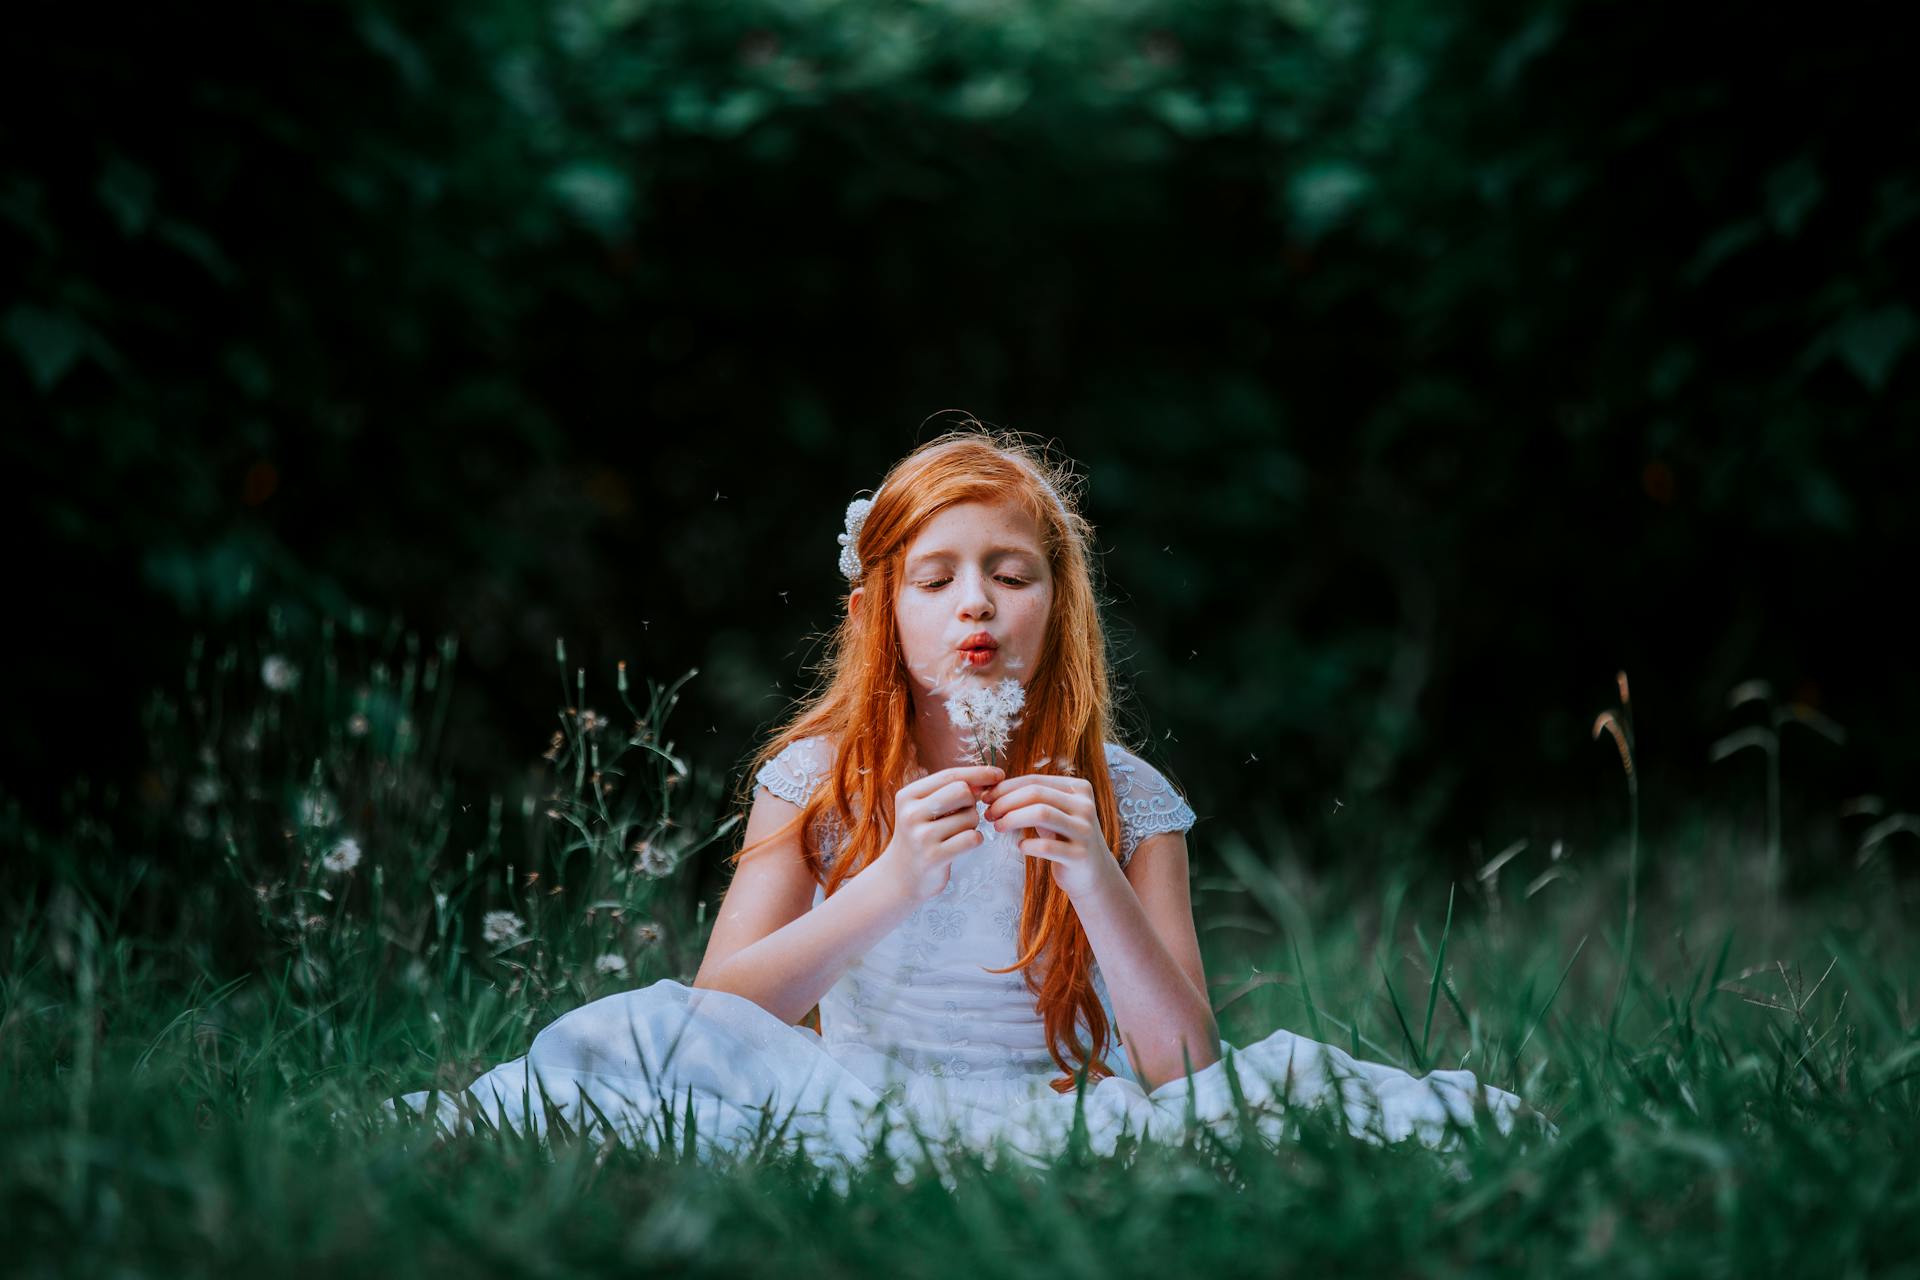 A little girl blowing dandelions | Source: Pexels